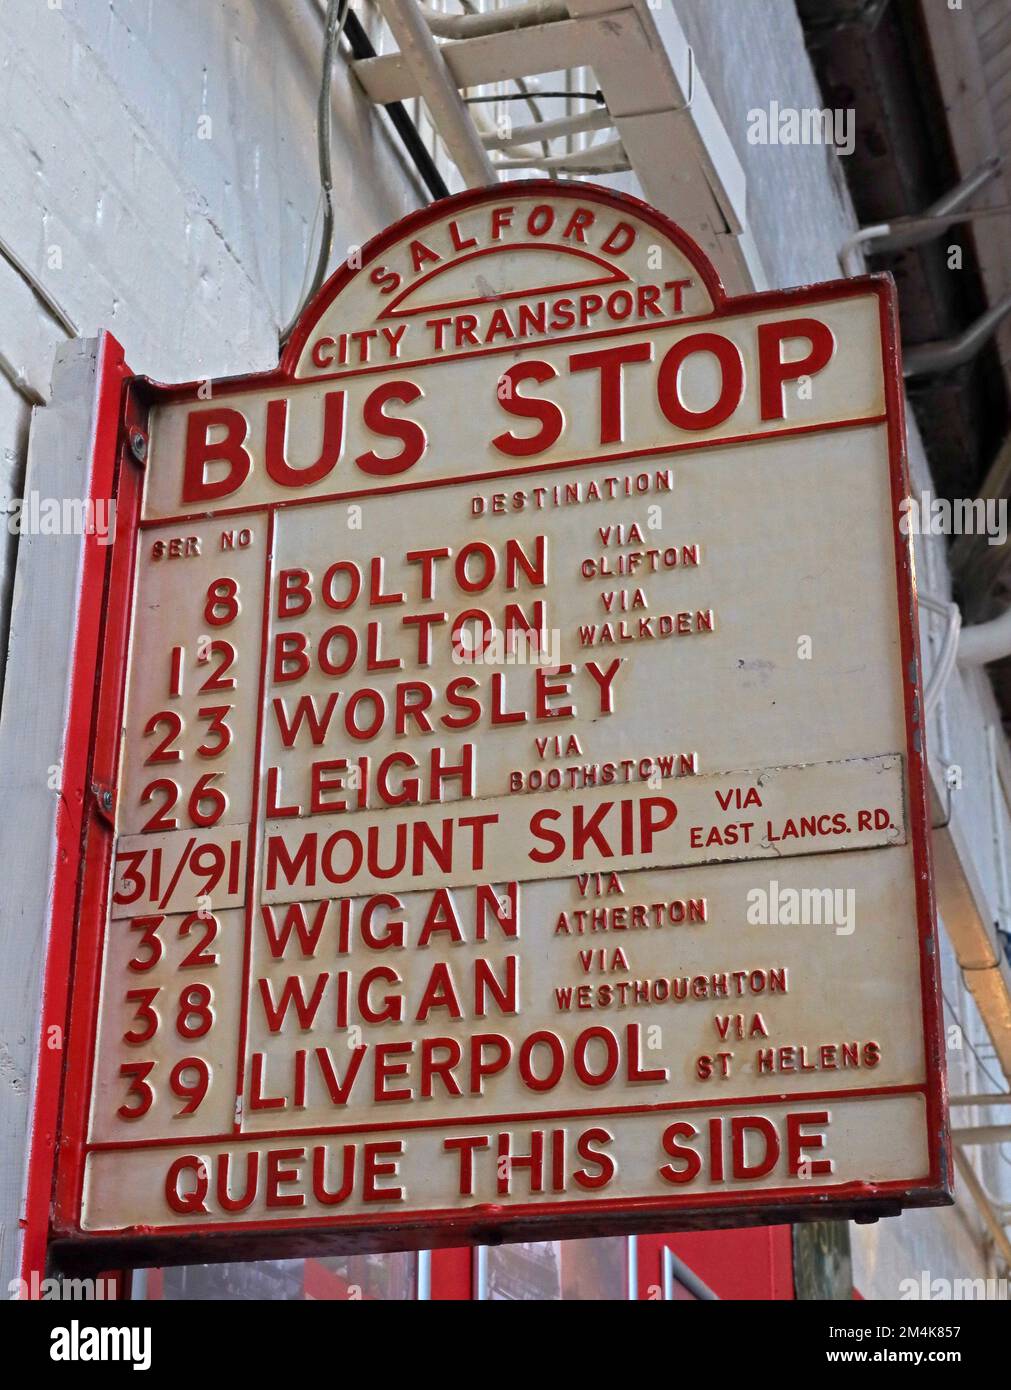 Salford City Transport, fermata dell'autobus, destinazioni, Queue This Side, Bolton, Worsley, Leigh, Mount Skip, Wigan , Liverpool Foto Stock